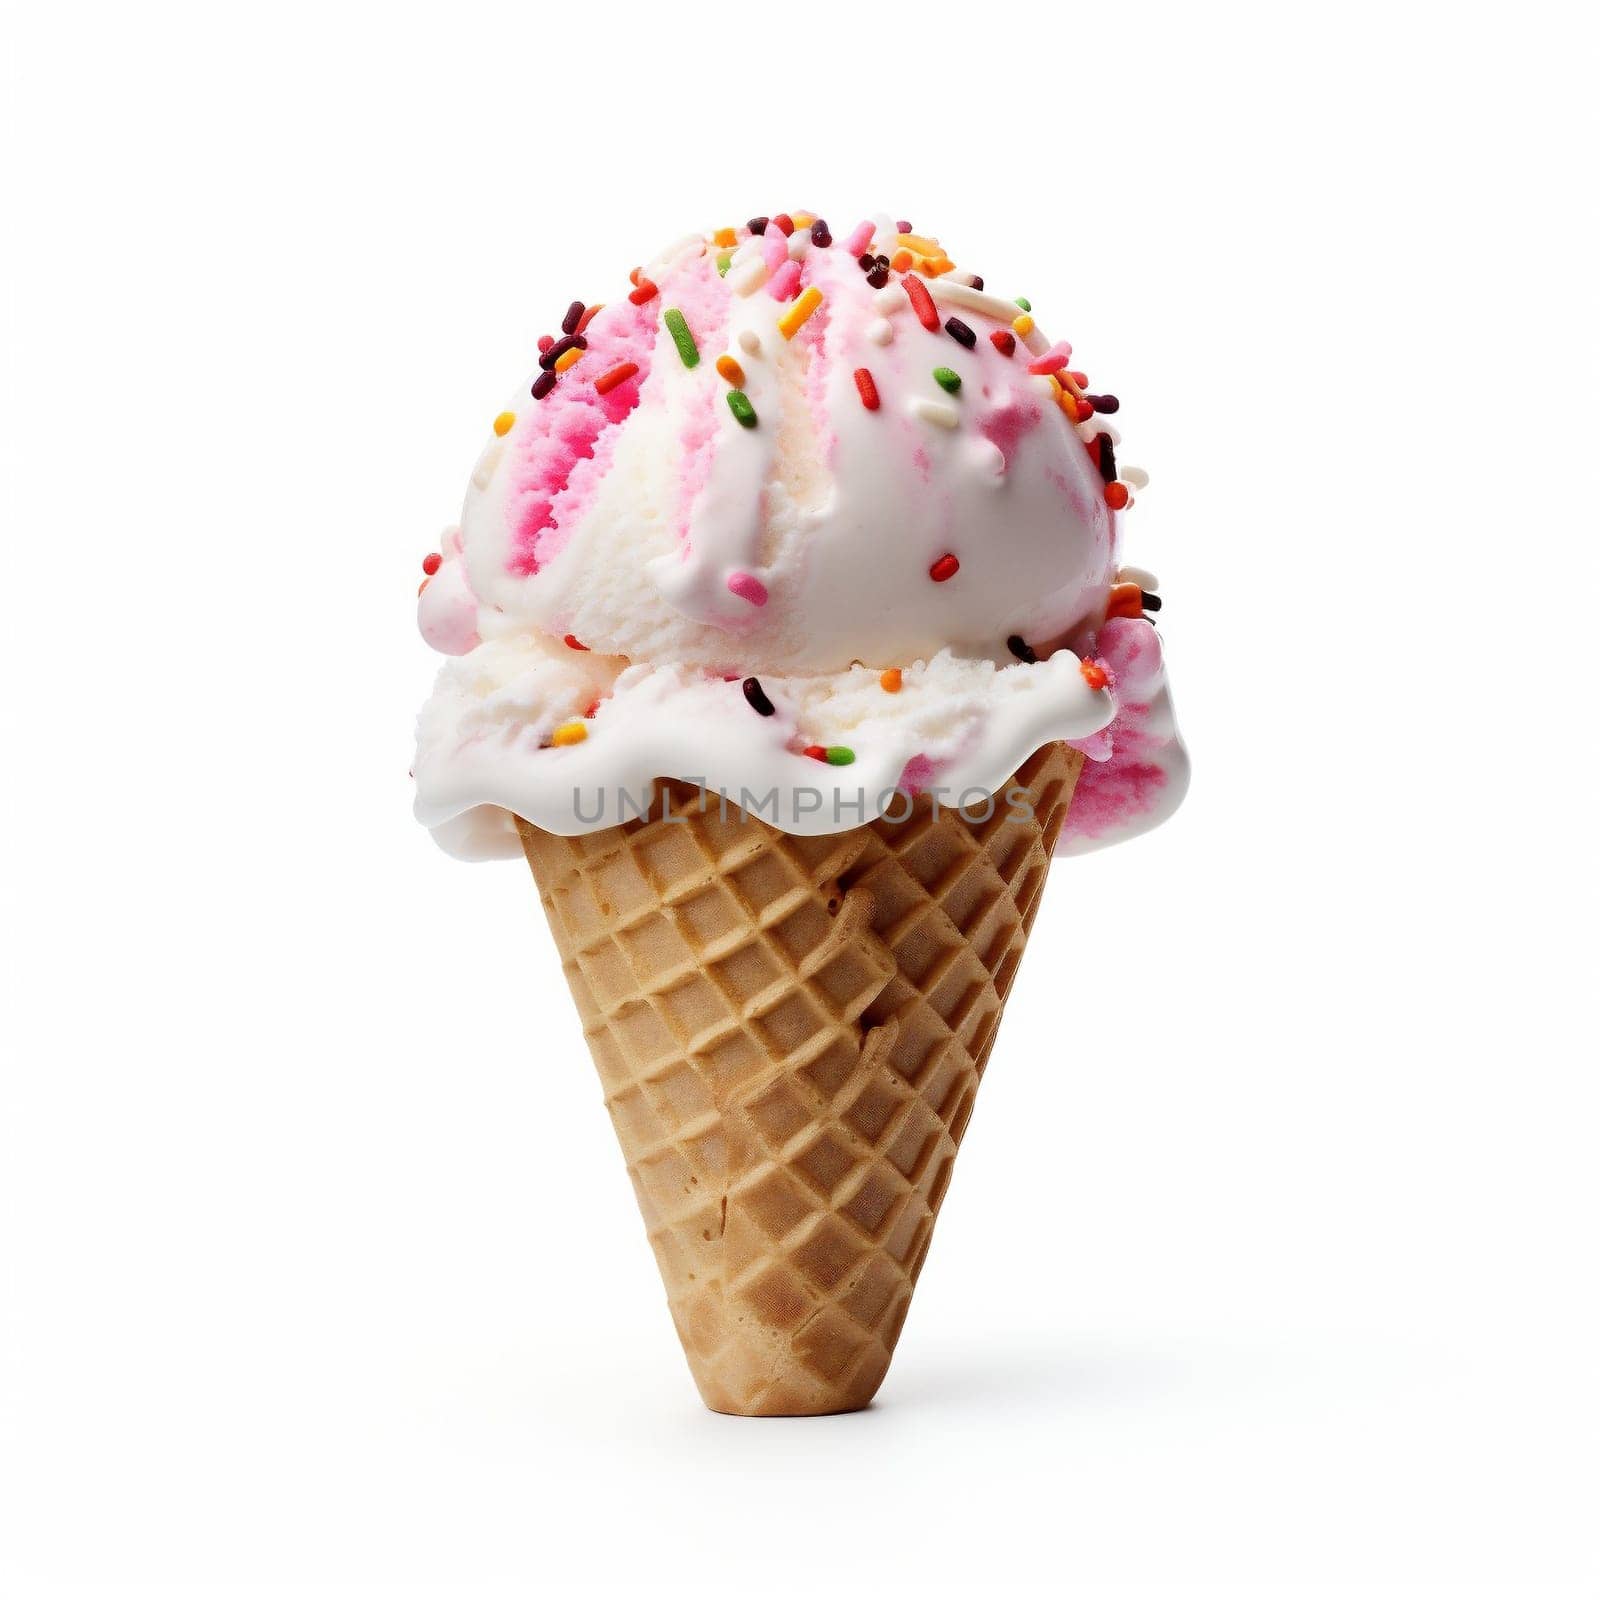 Ice Cream Cone Vanilla and Strawberry Flavors Isolated on White Background. by Rina_Dozornaya